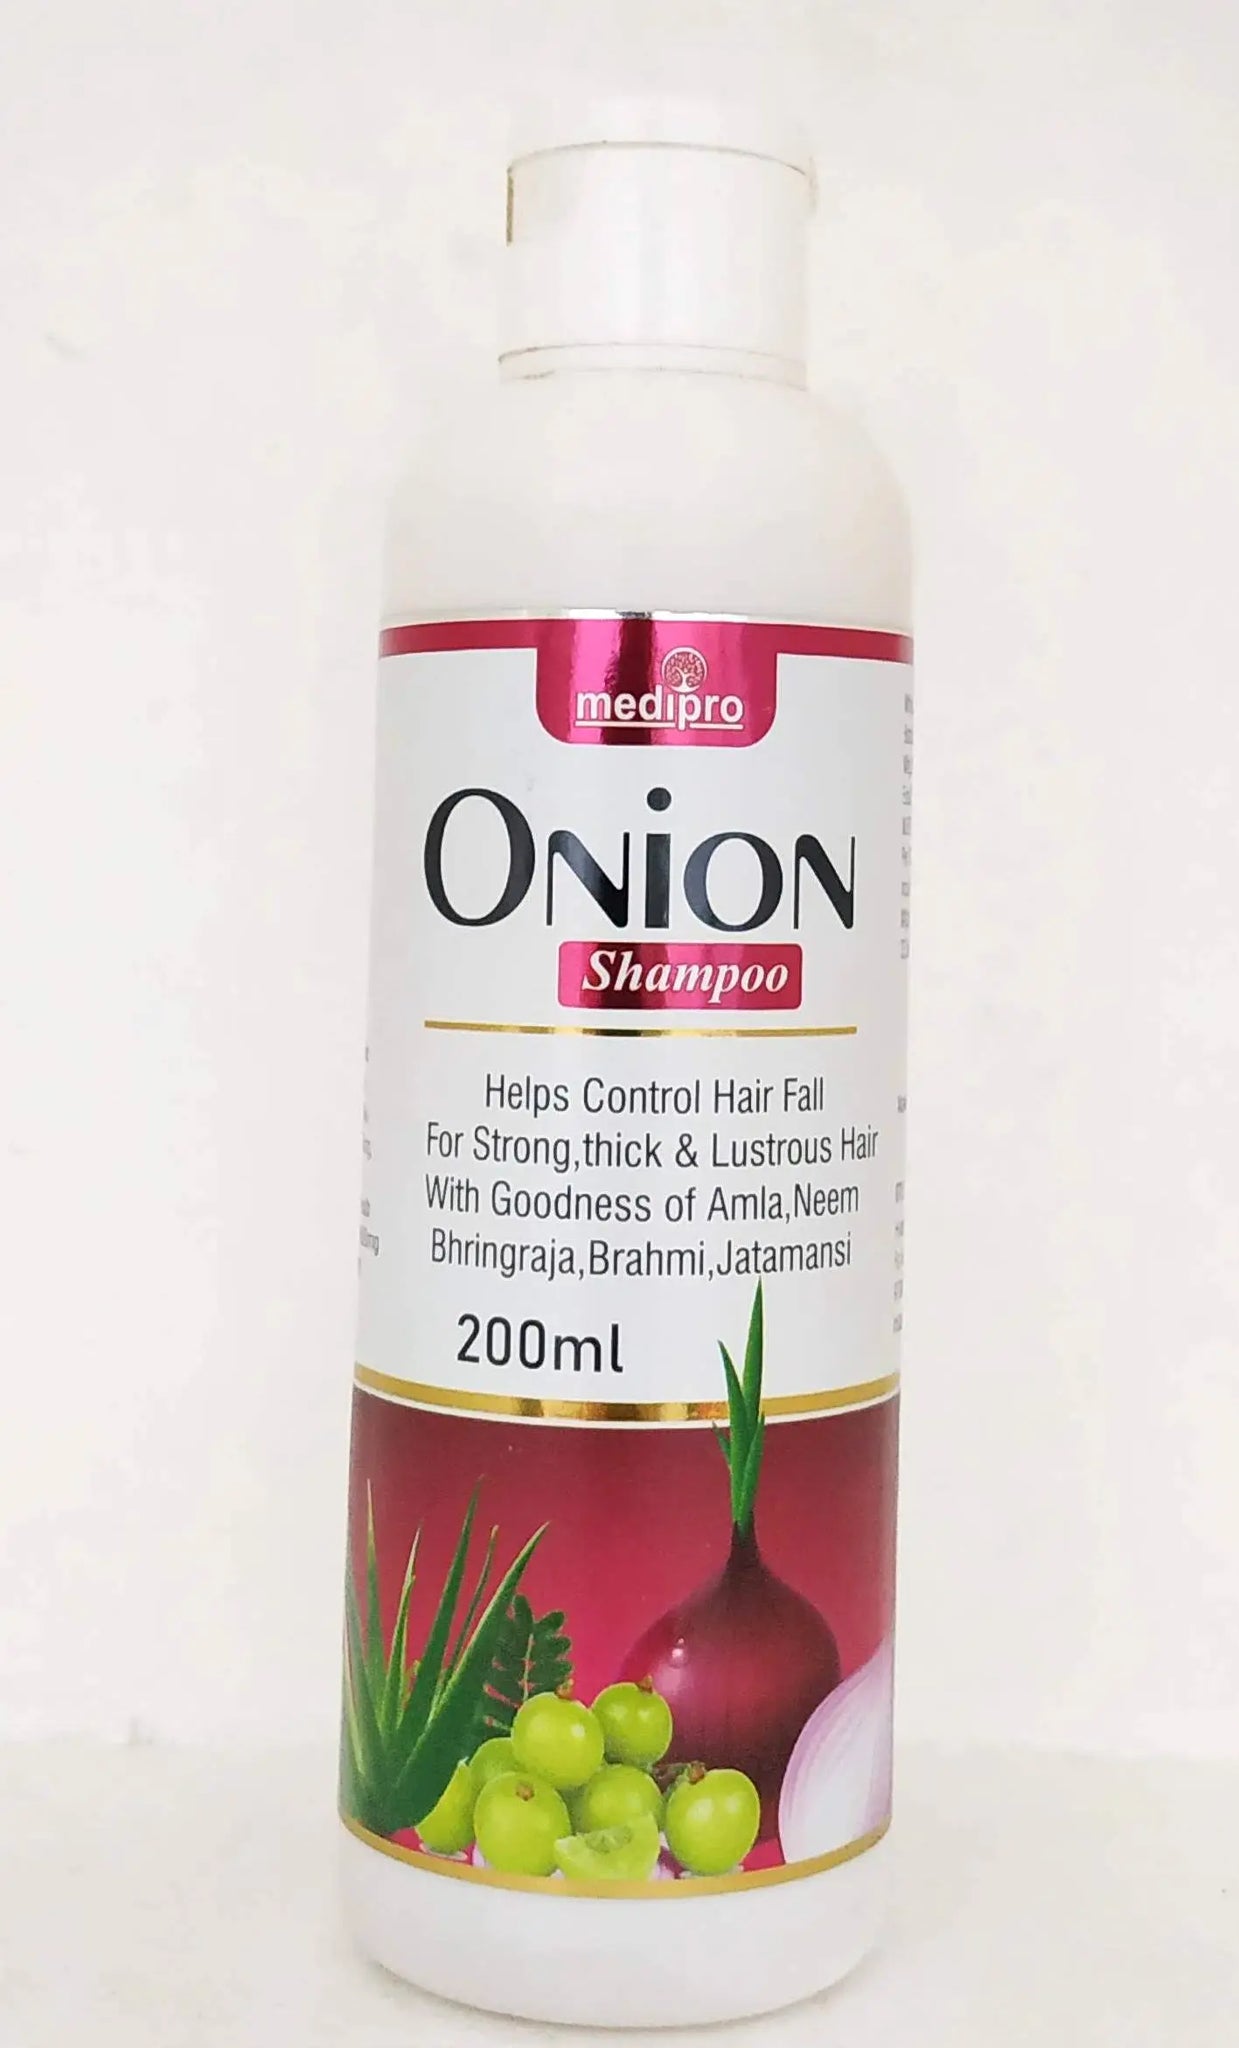 Onion shampoo 200ml Medipro